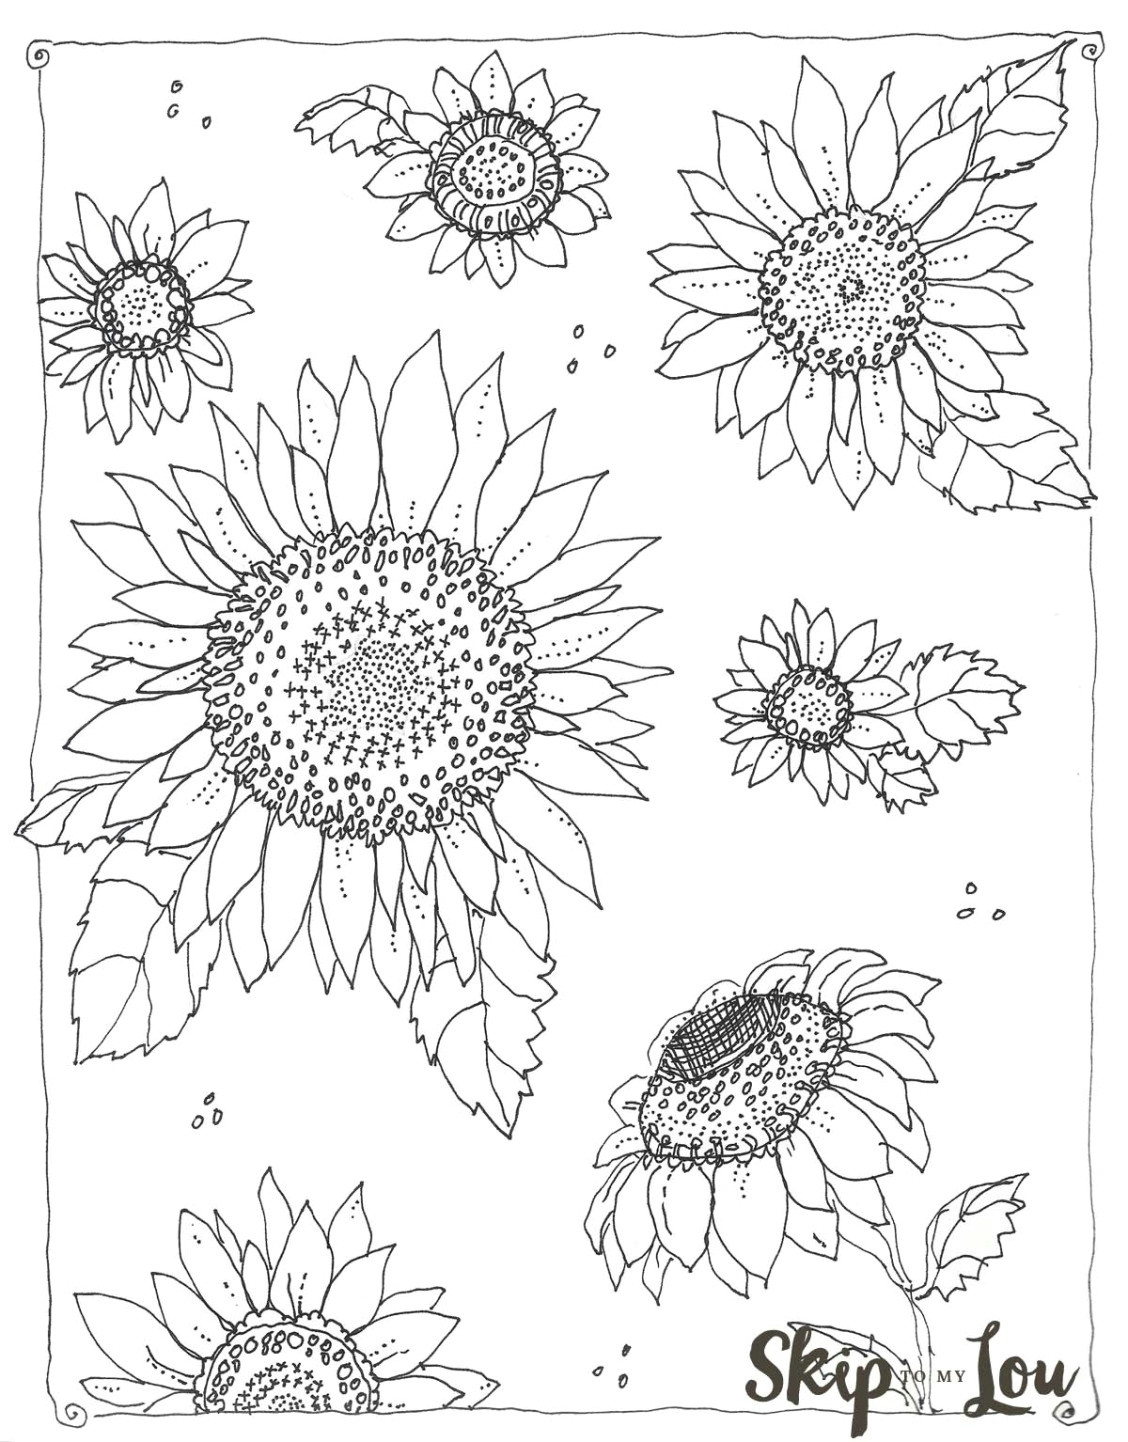 Drawings Of Flowers In Black and White 7 Elegant Black and White Pictures Of Flowers Pictures Best Roses